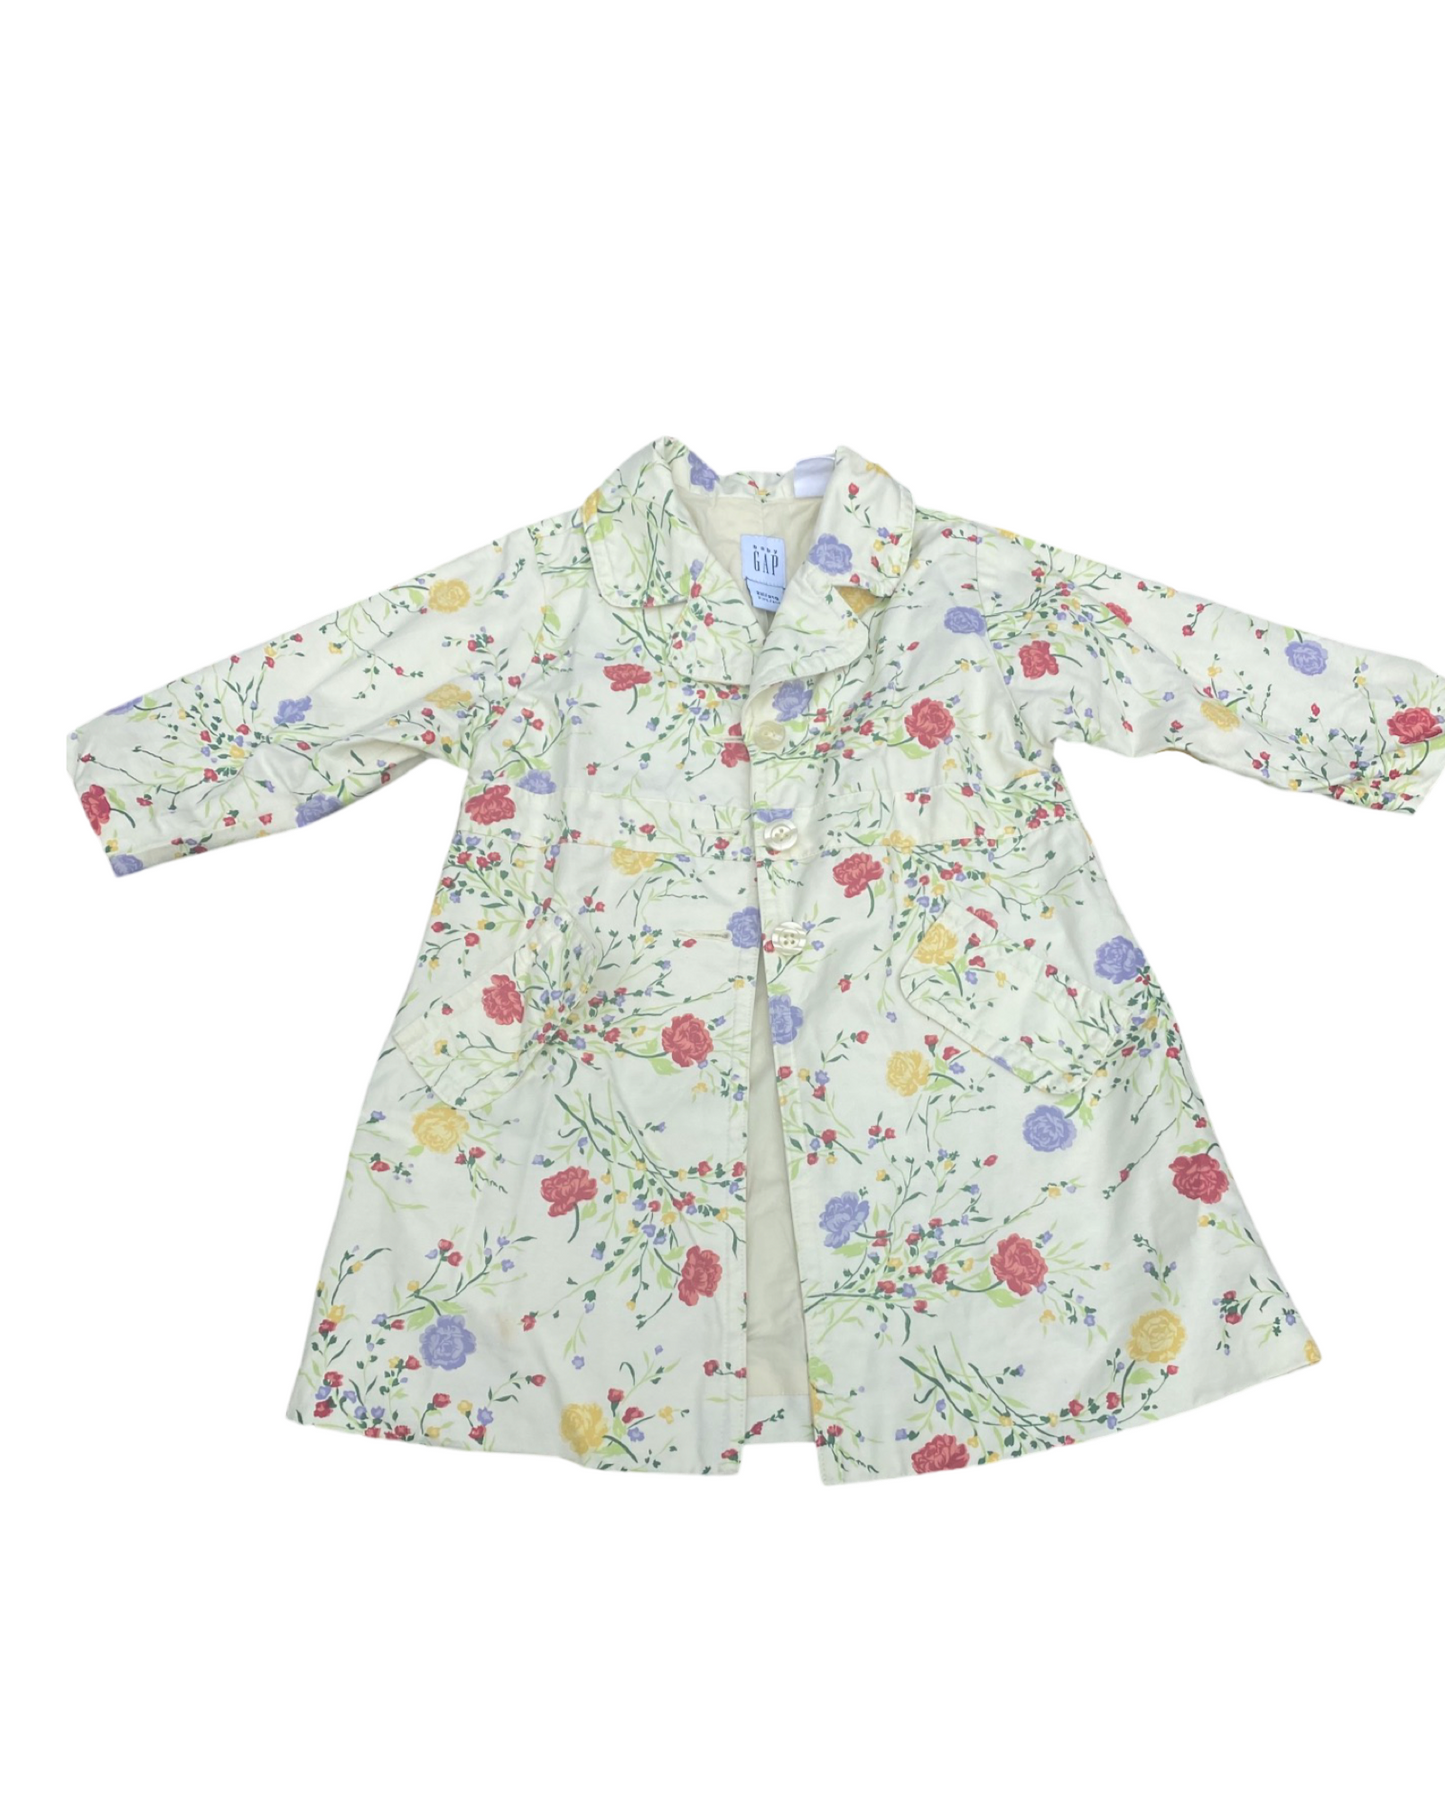 Baby Gap floral print jacket (size 1-2yrs)